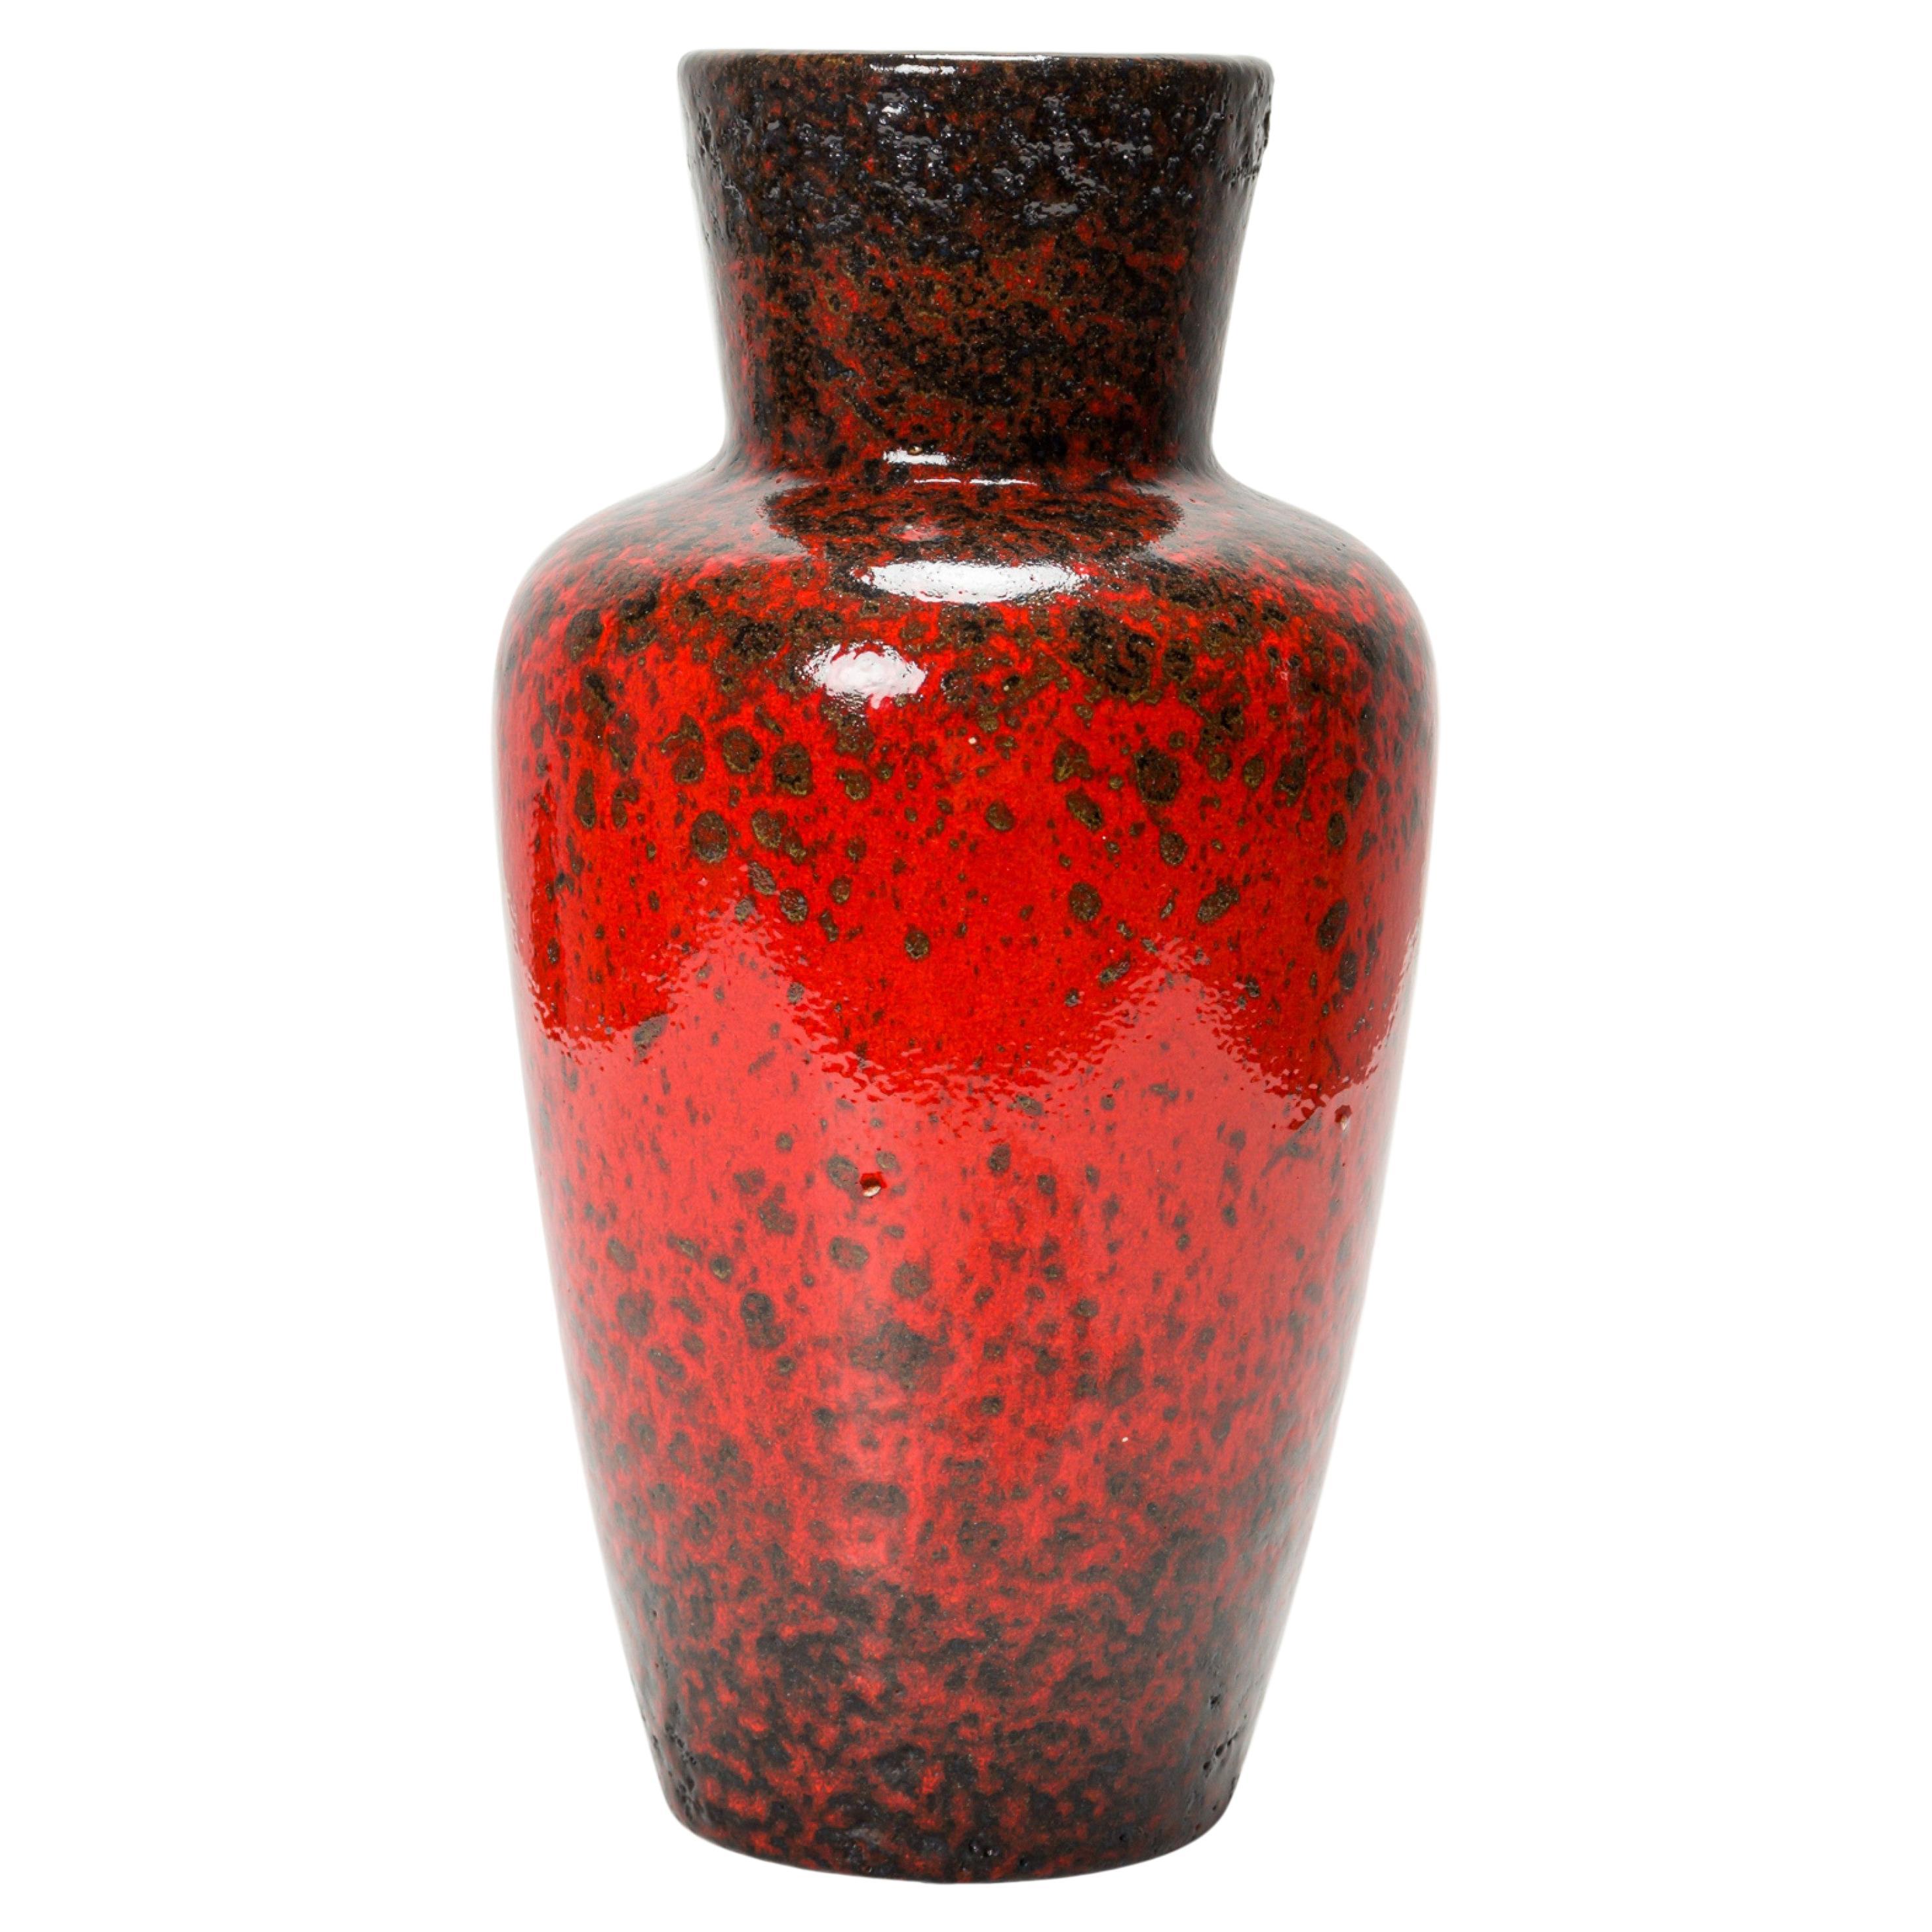 German Mid-Century Red and Black Glazed Fat Lava Ceramic Vase